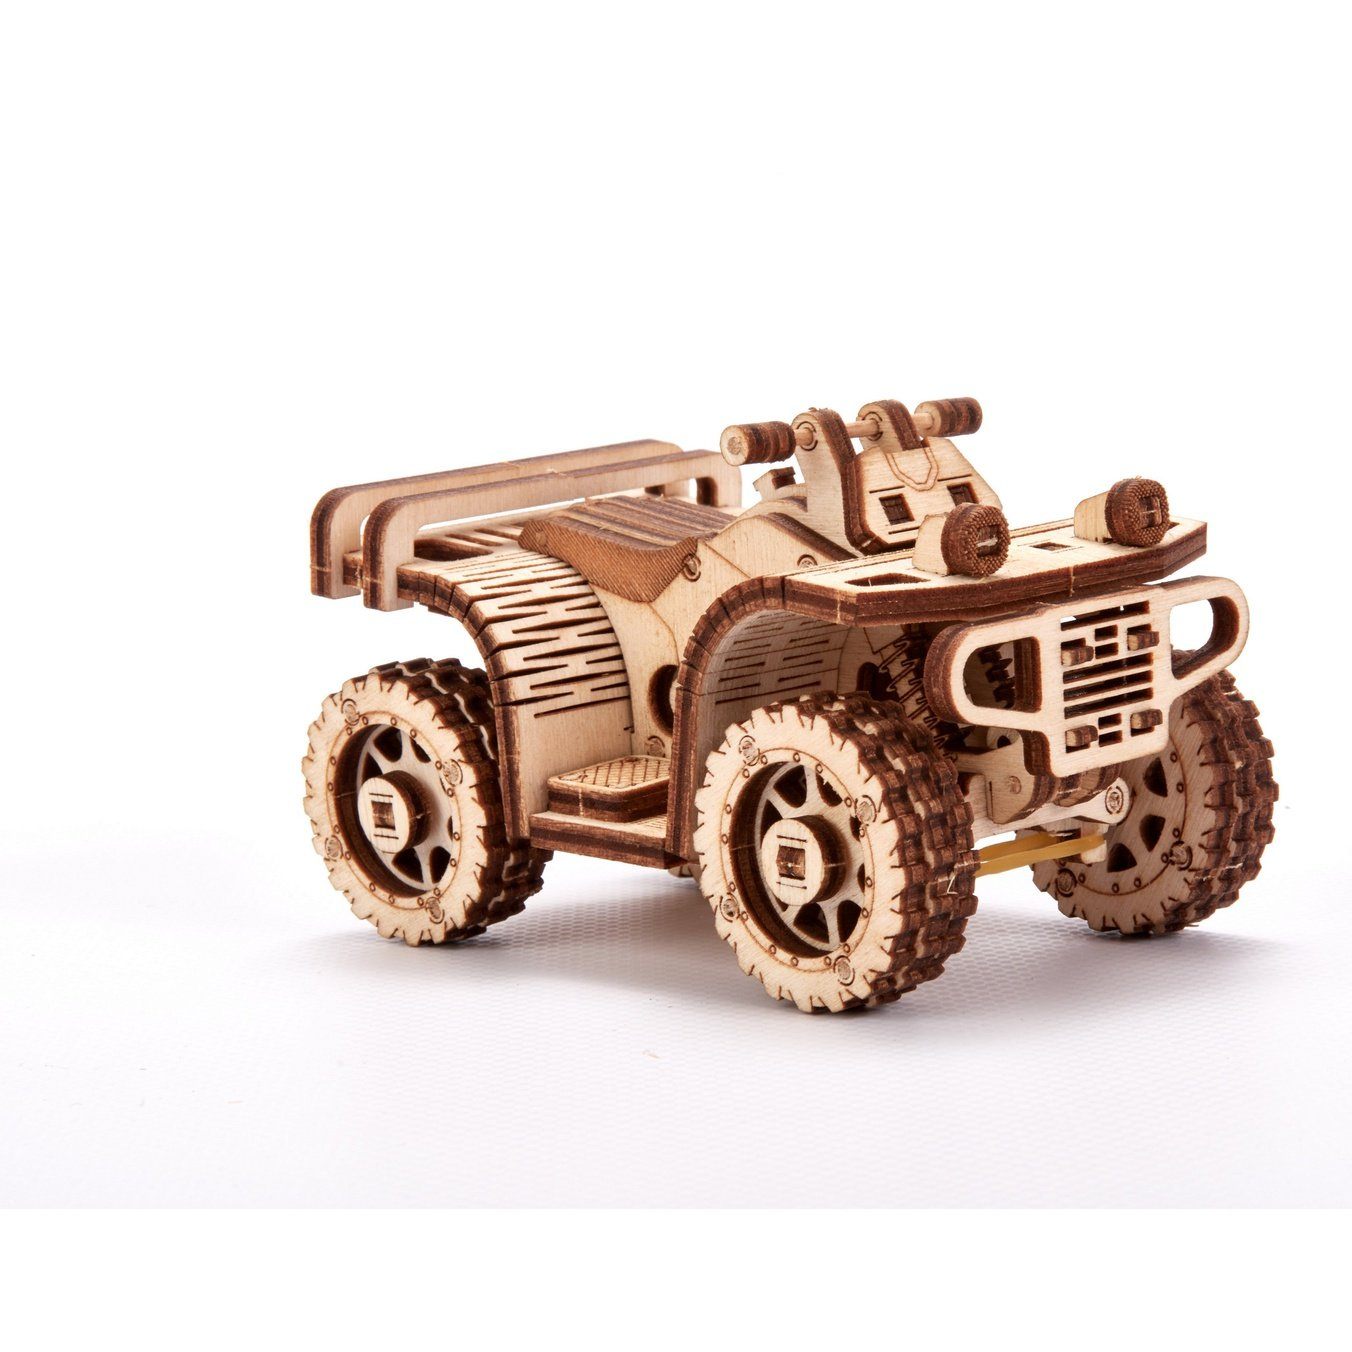 Wood Trick ATV - Houten Modelbouw